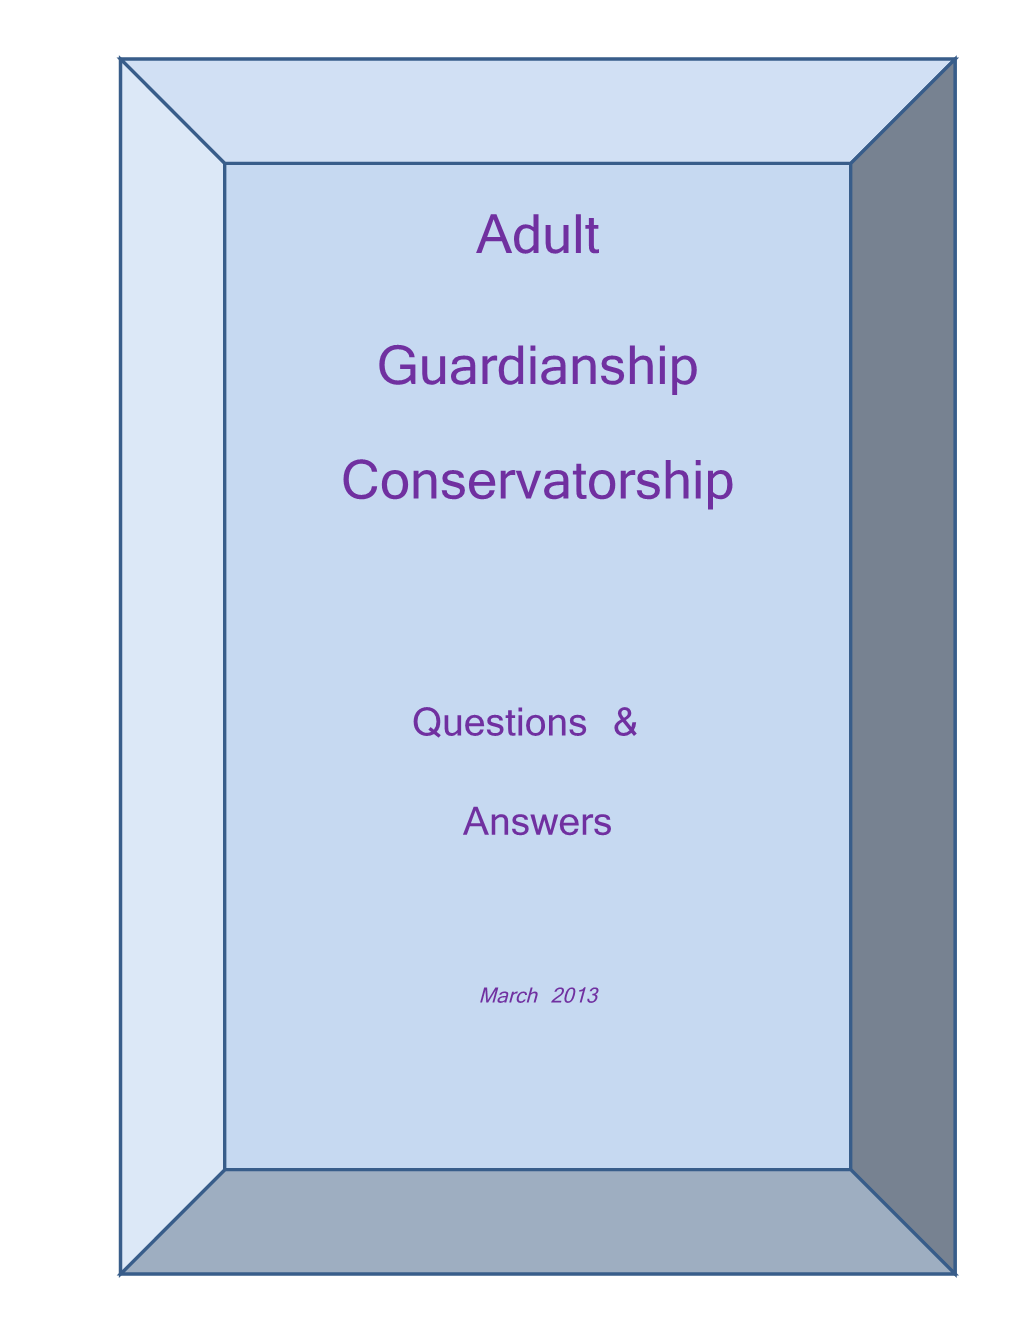 Adult Guardianship/Conservatorship: Questions & Answers